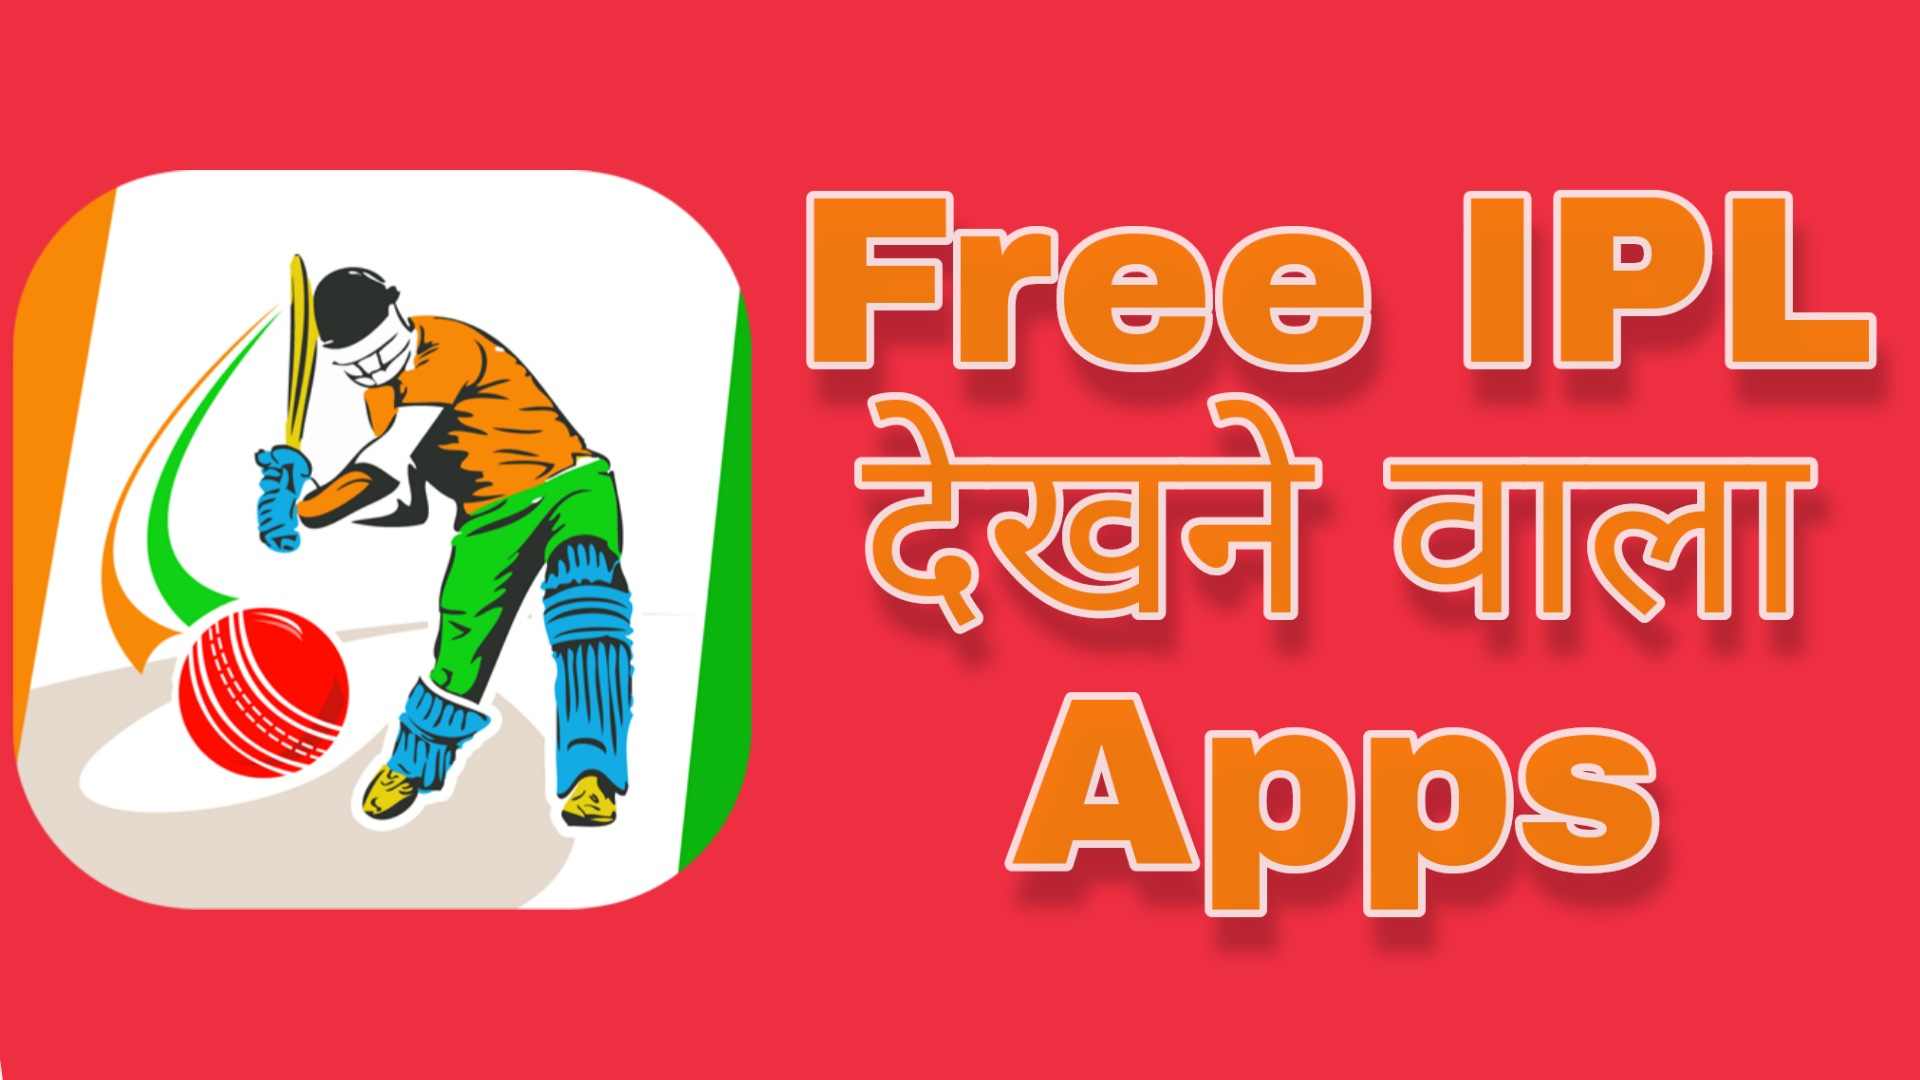 IPL Live App